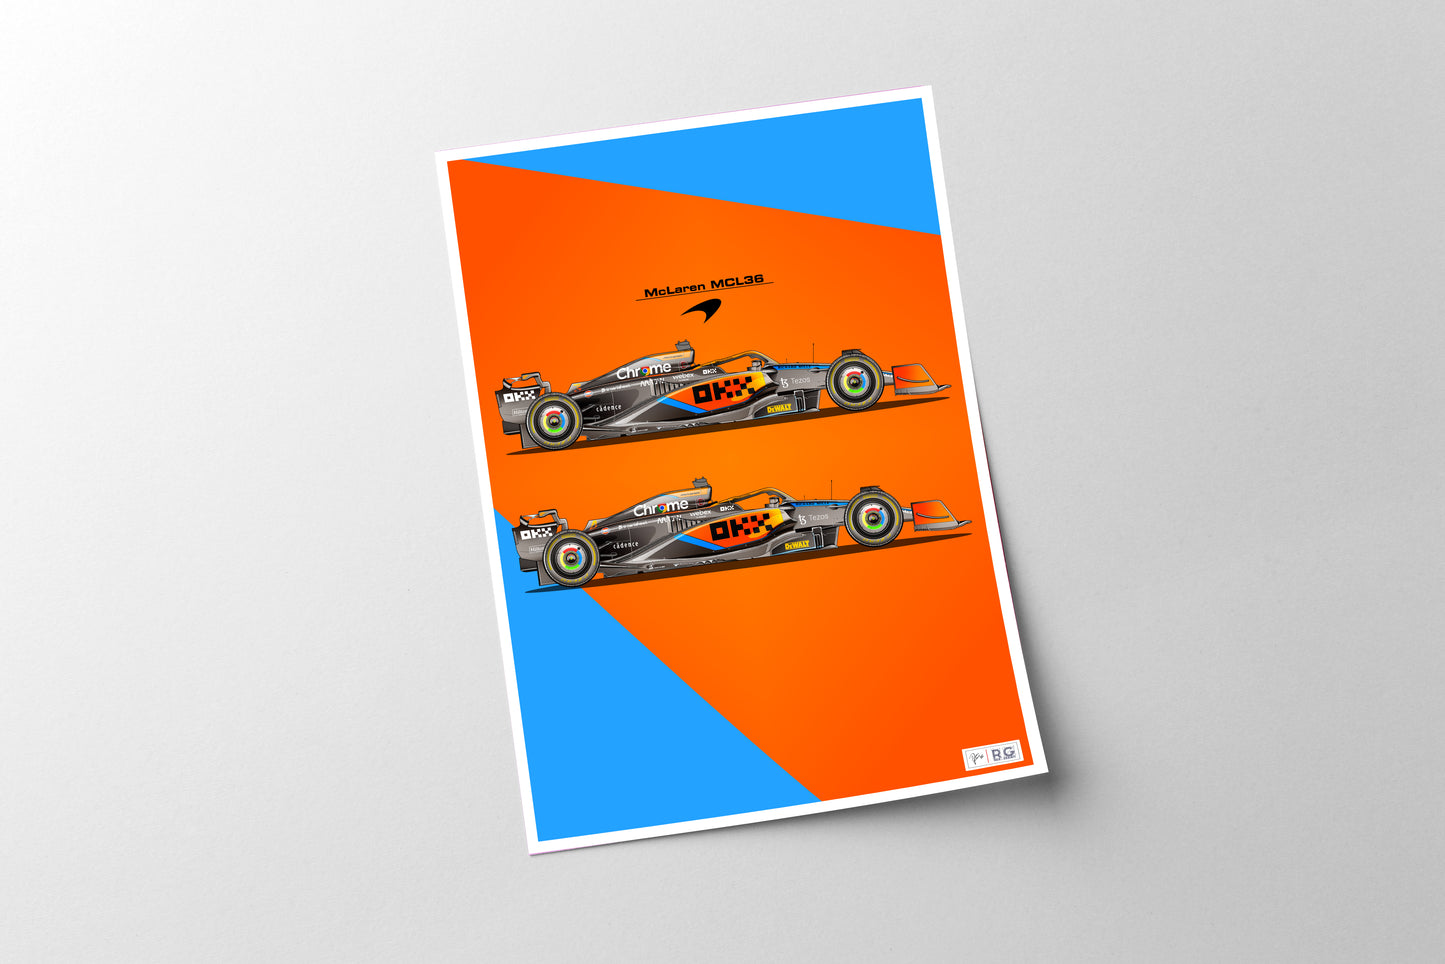 McLaren MCL36 Poster, Lando Norris and Daniel Ricciardo, F1 Art Print A3 A2